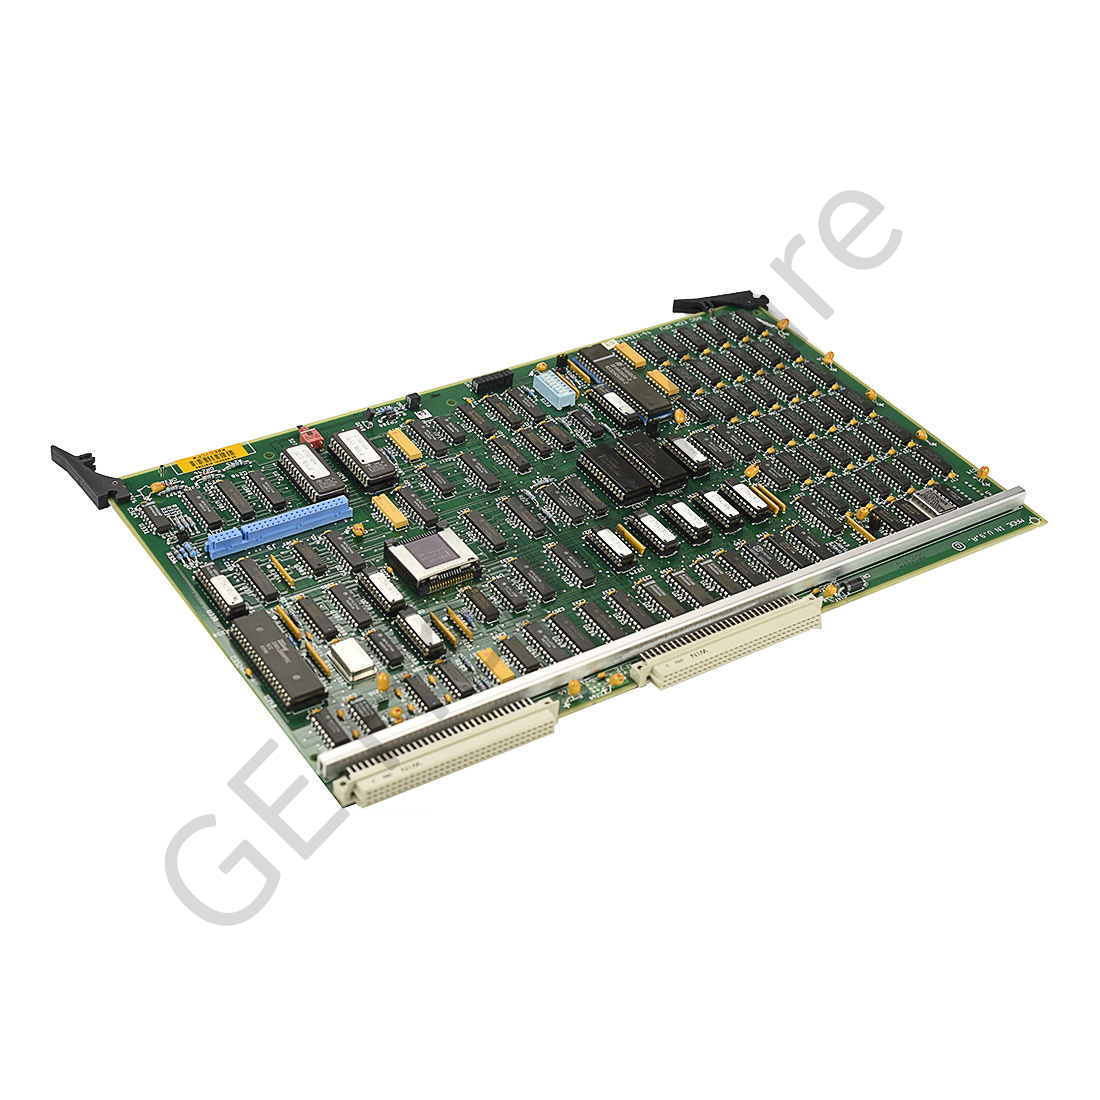 ASC/ECM CPU Board 46-226936G3